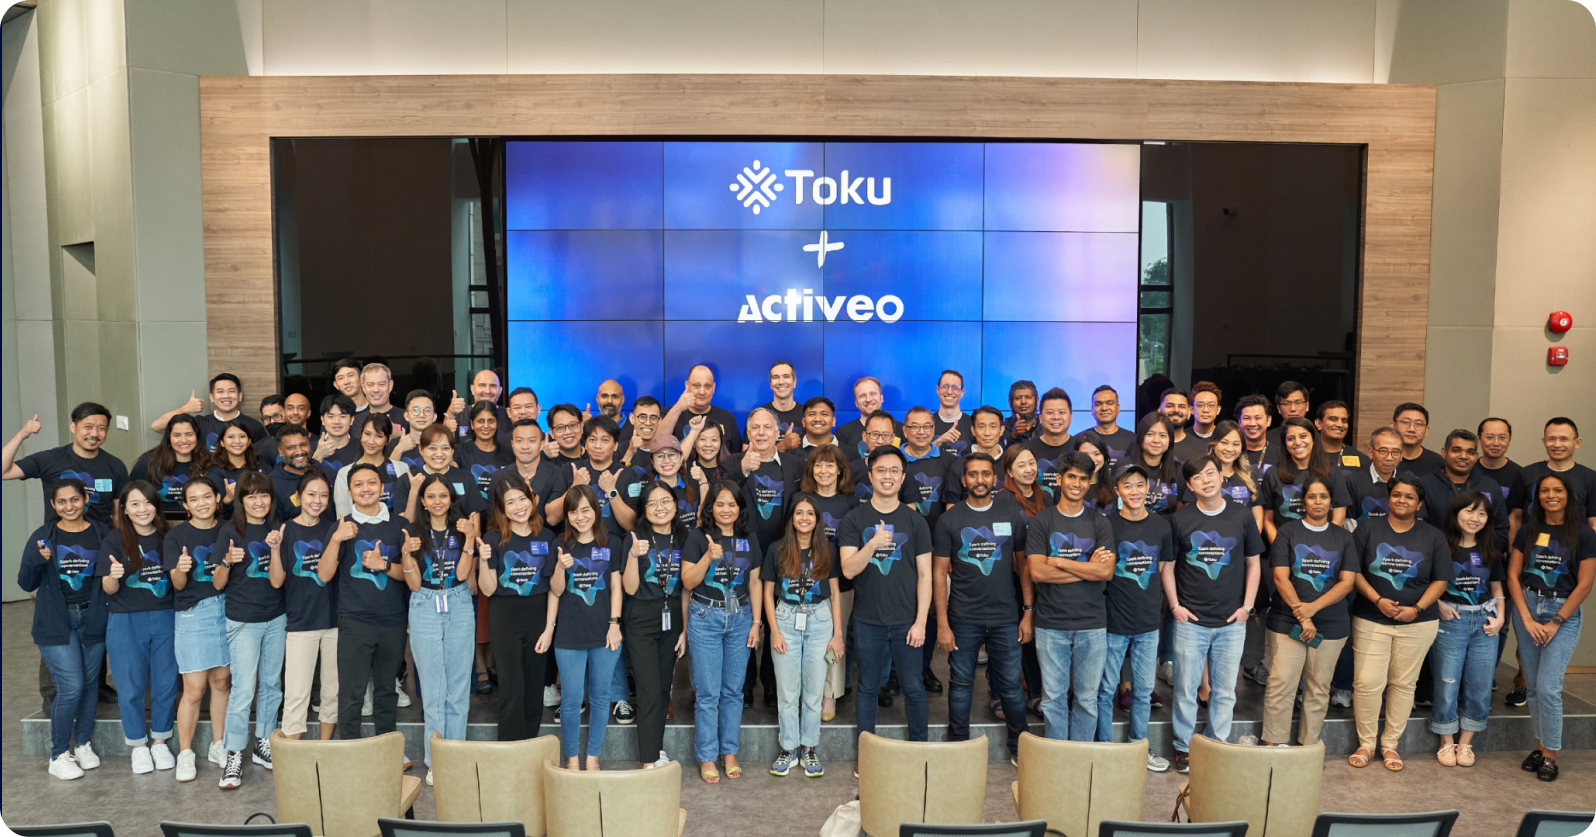 Toku Activeo team together 3x